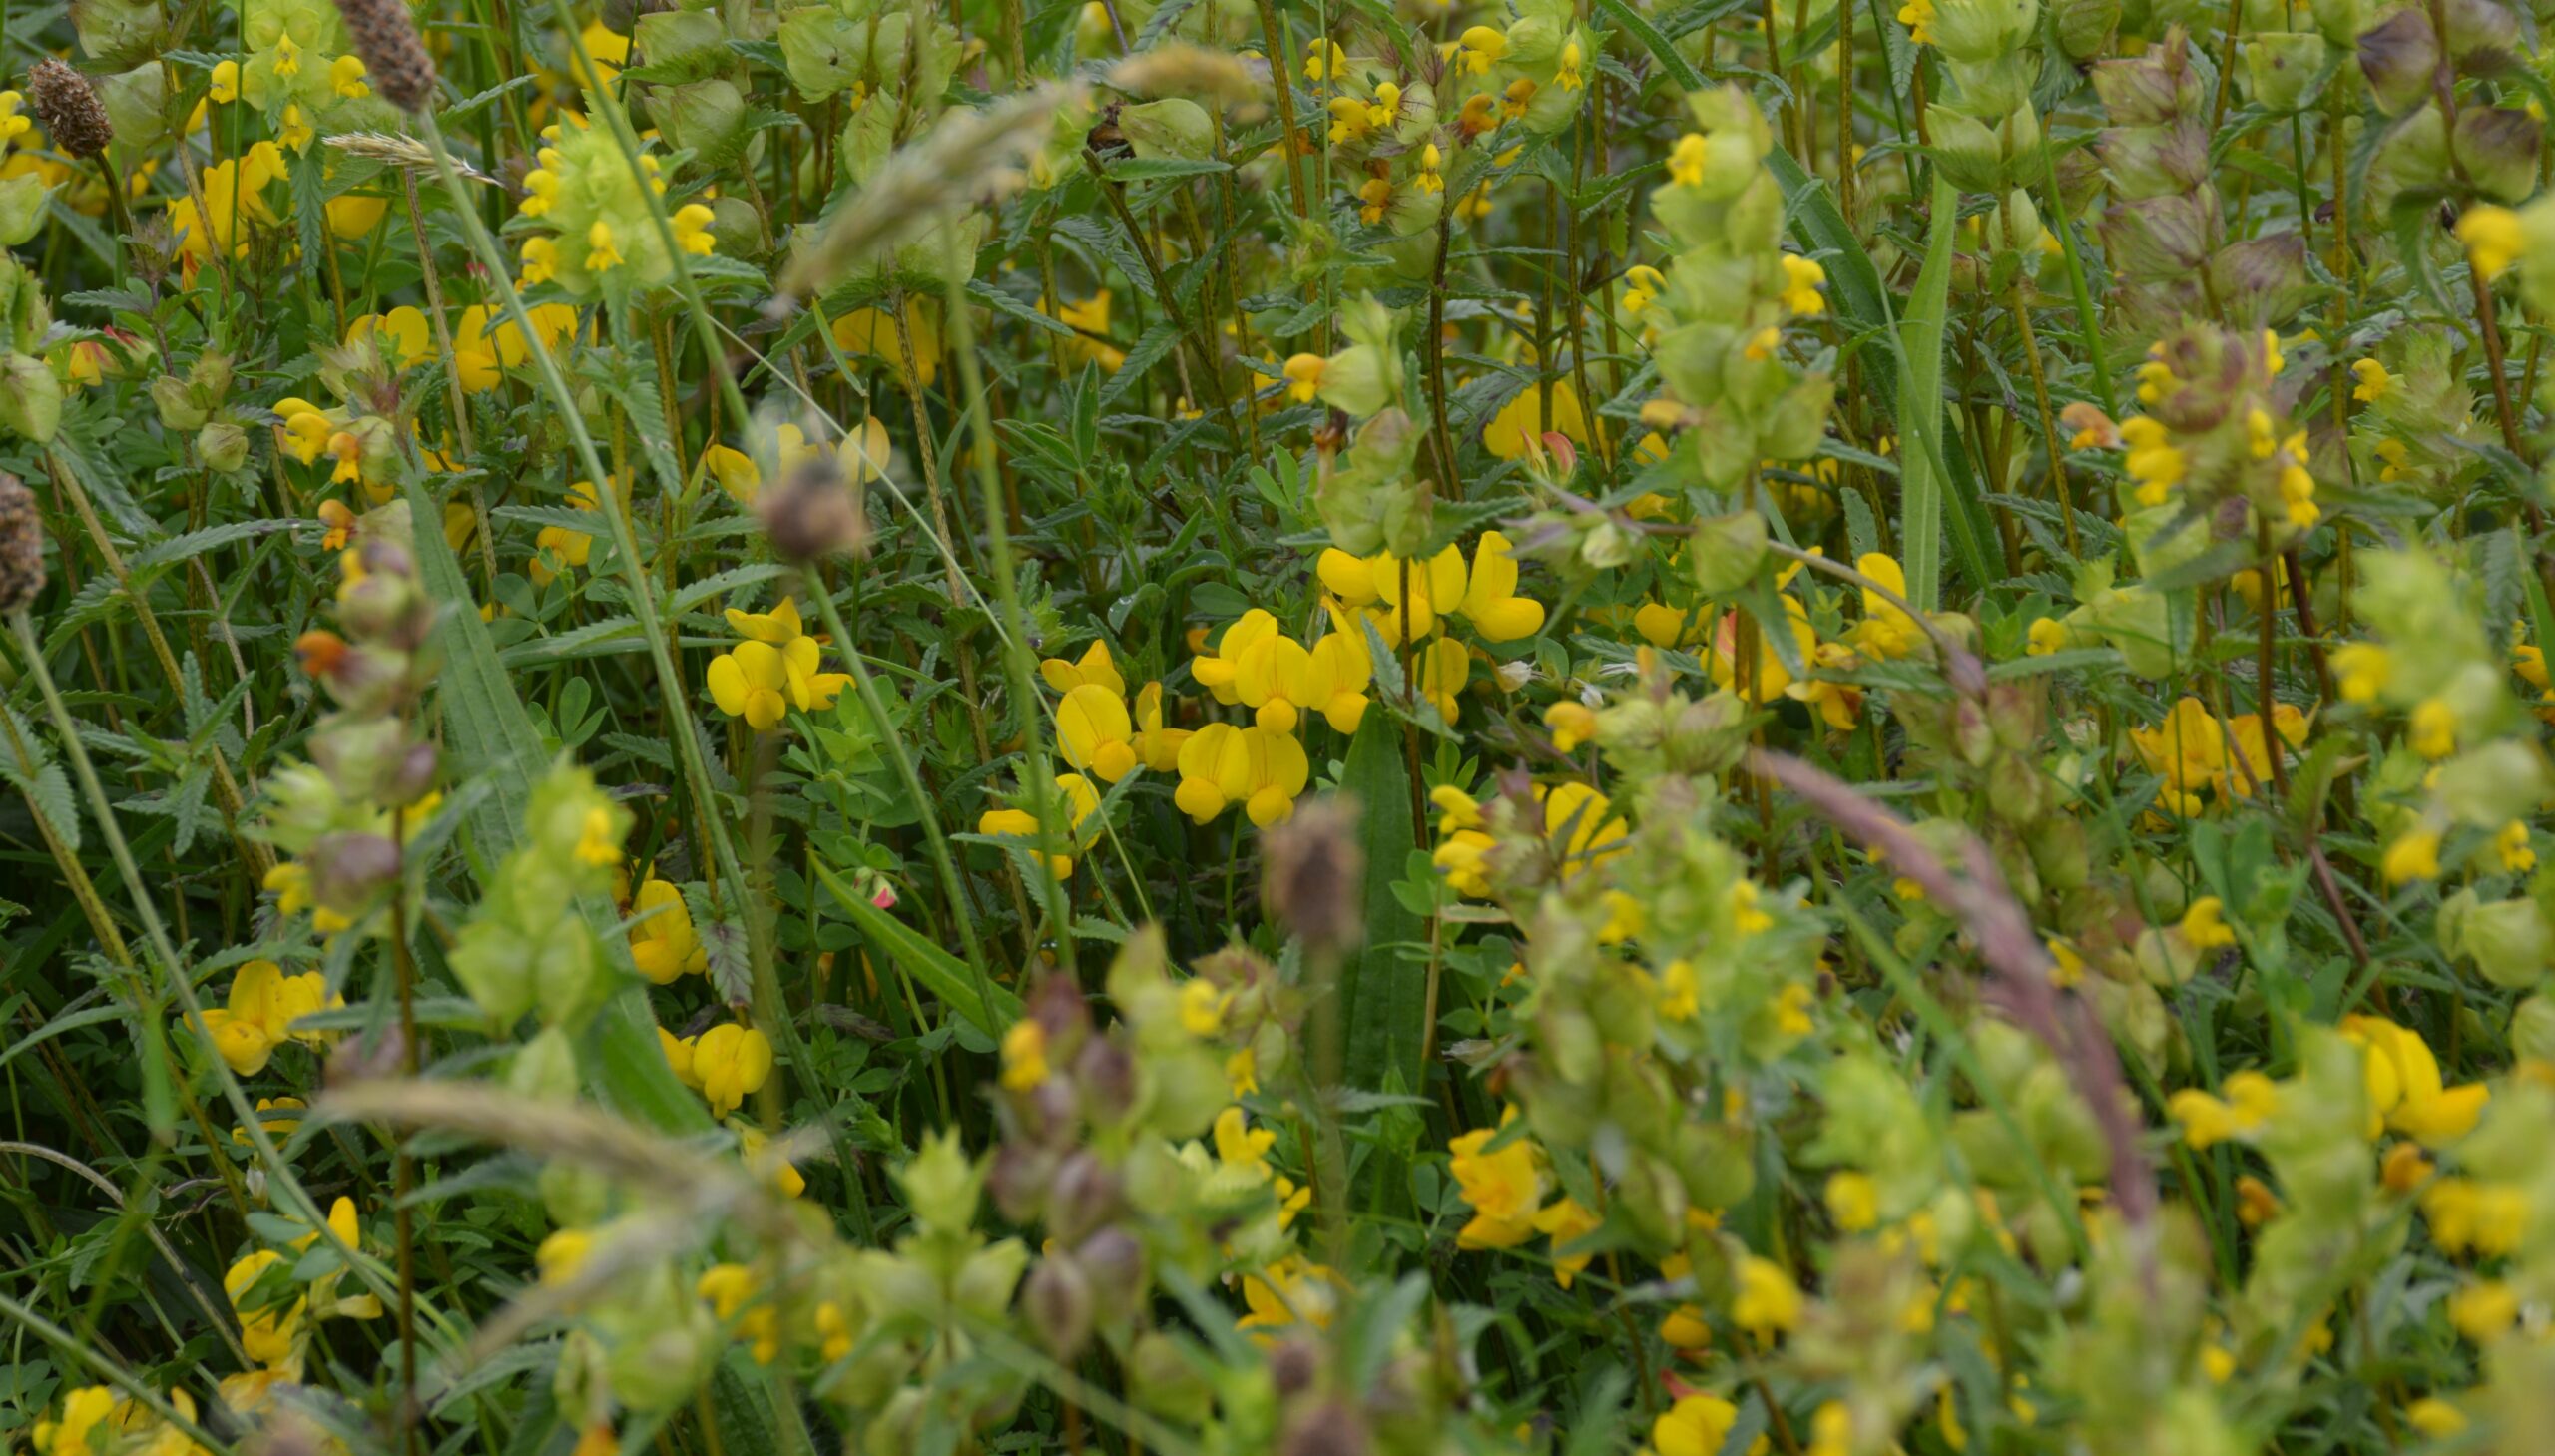 Hemiparasitic plants in Irish grasslands